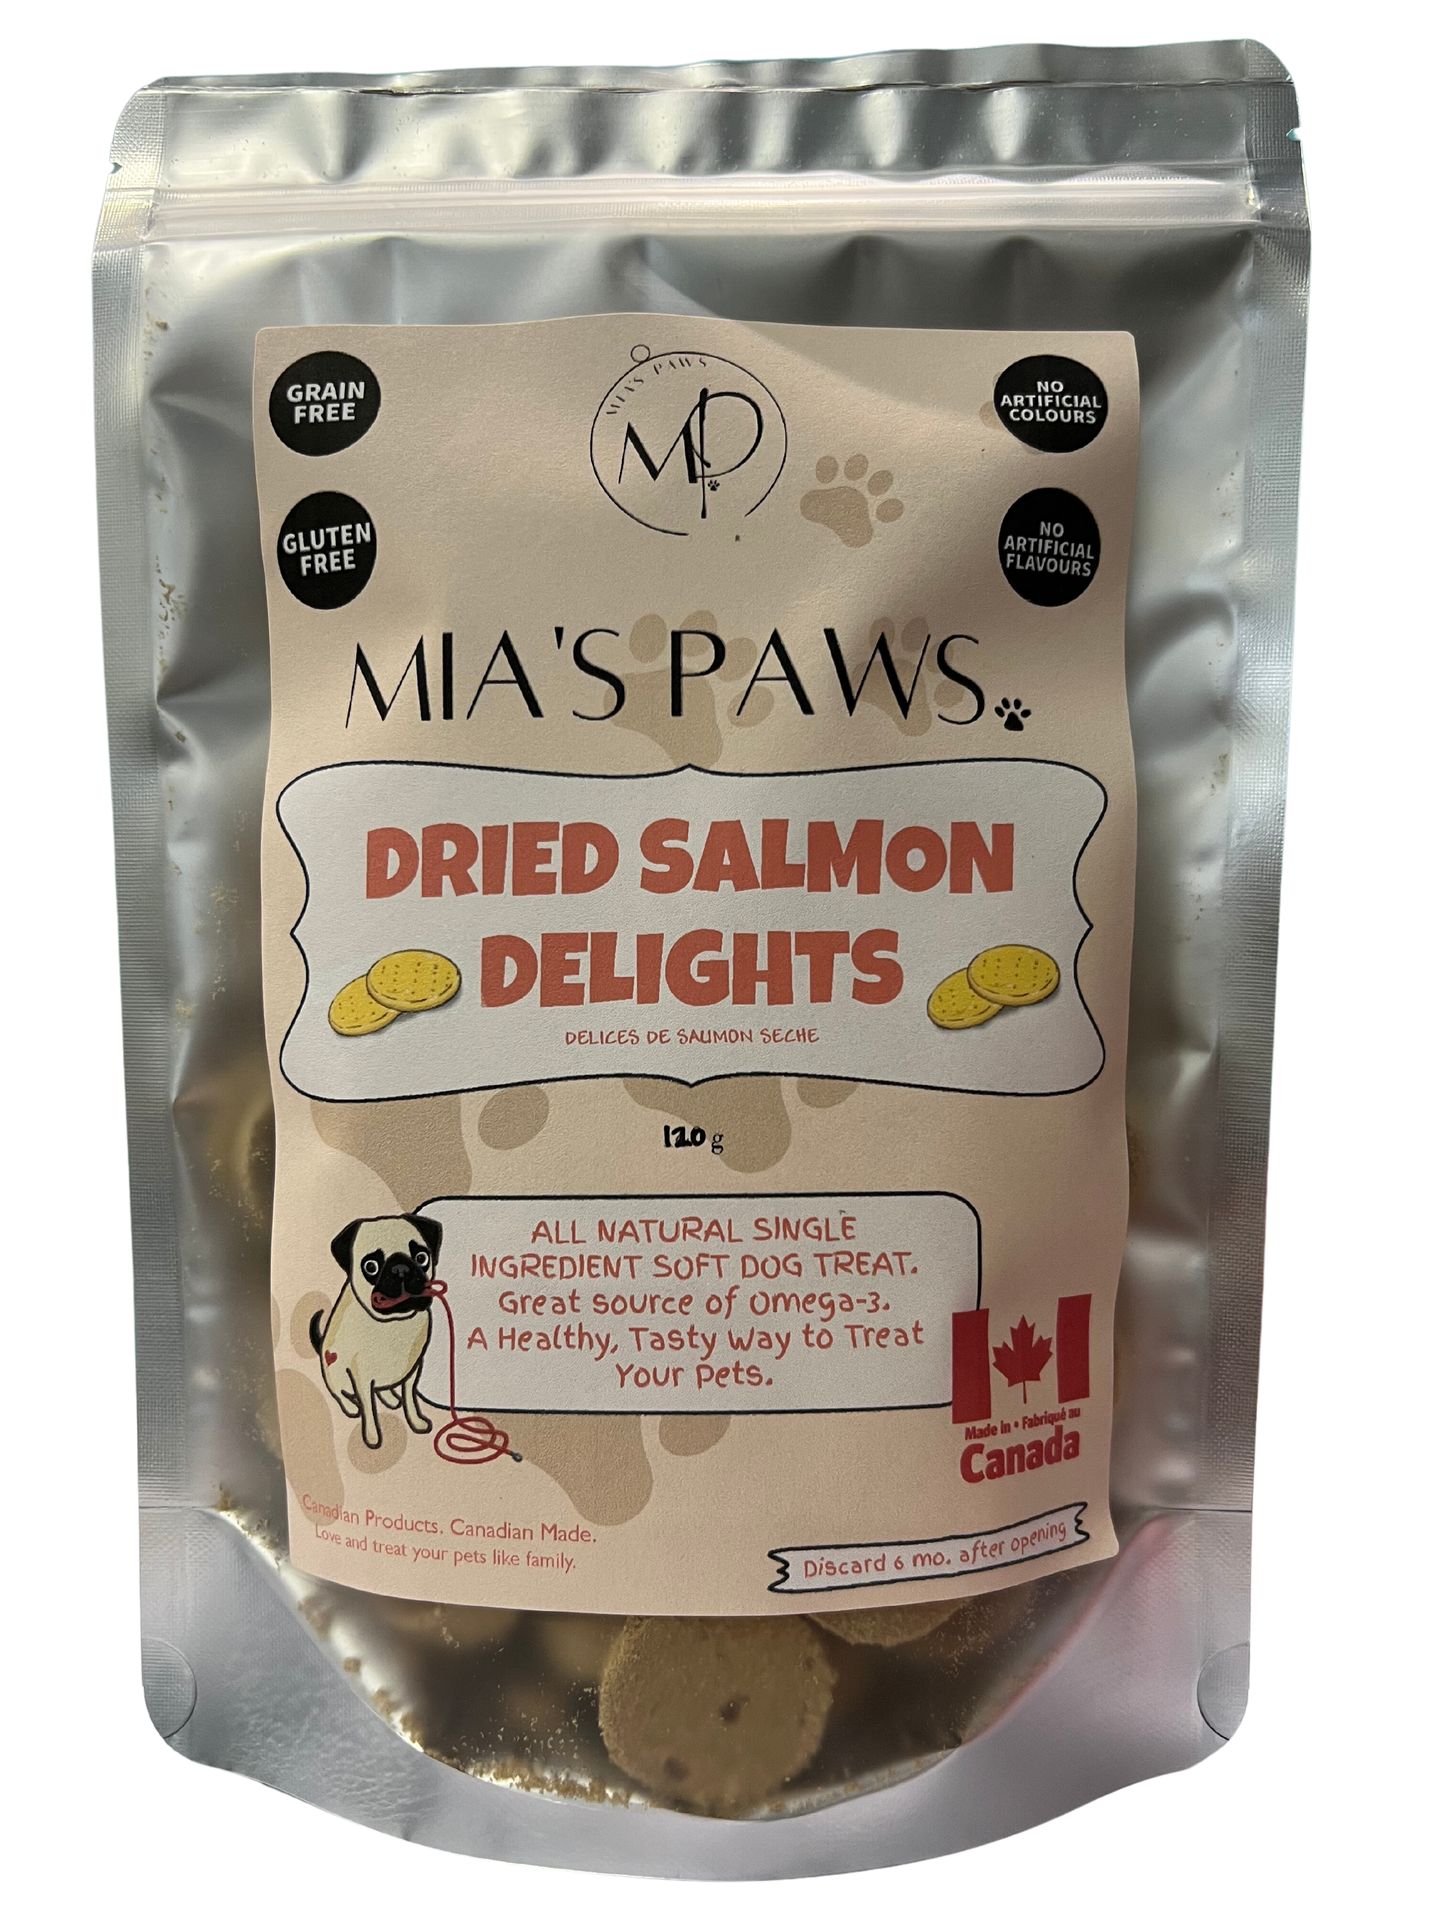 Dried Salmon Delights - Mia's Paws